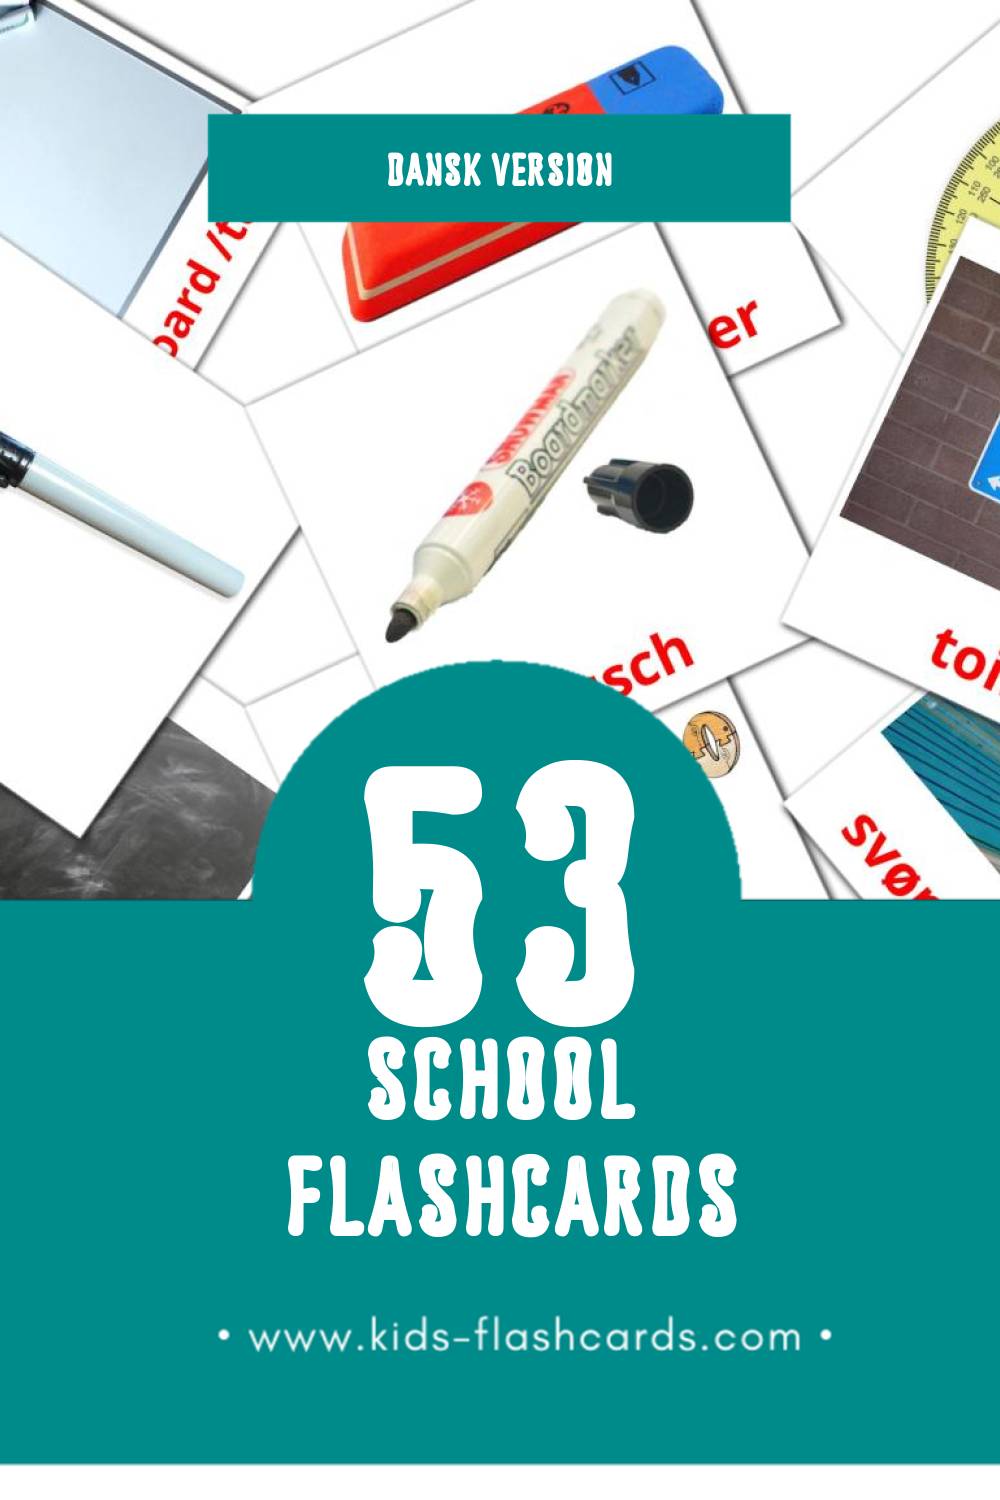 Visual Skole Flashcards for Toddlers (36 cards in Dansk)